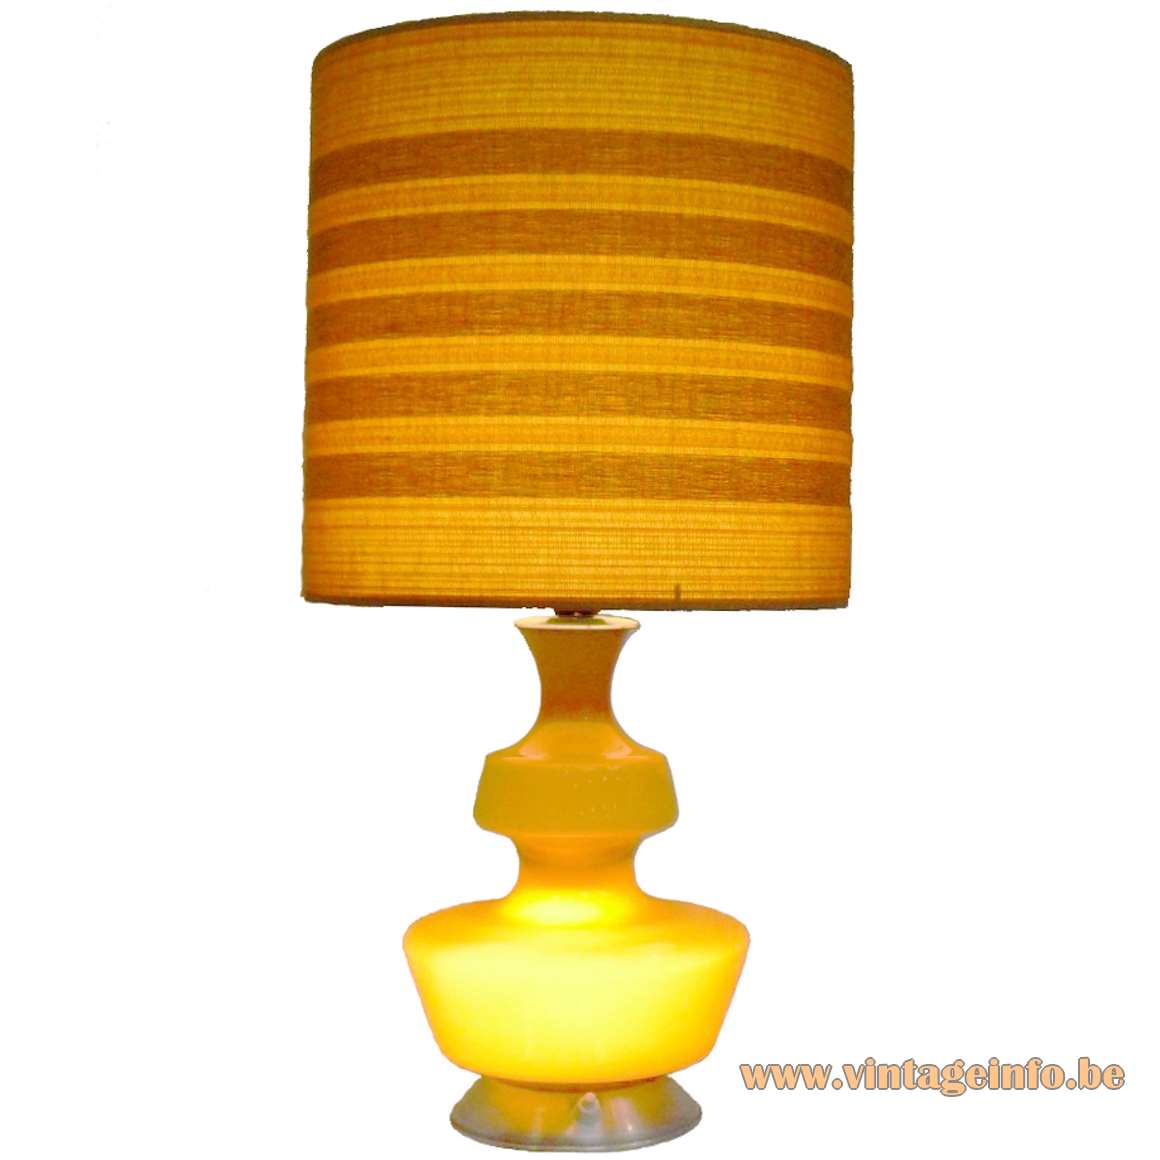 Holmegaard table lamp aluminium base yellow-ochre glass round striped fabric lampshade 1960s 1970s Massive Belgium 